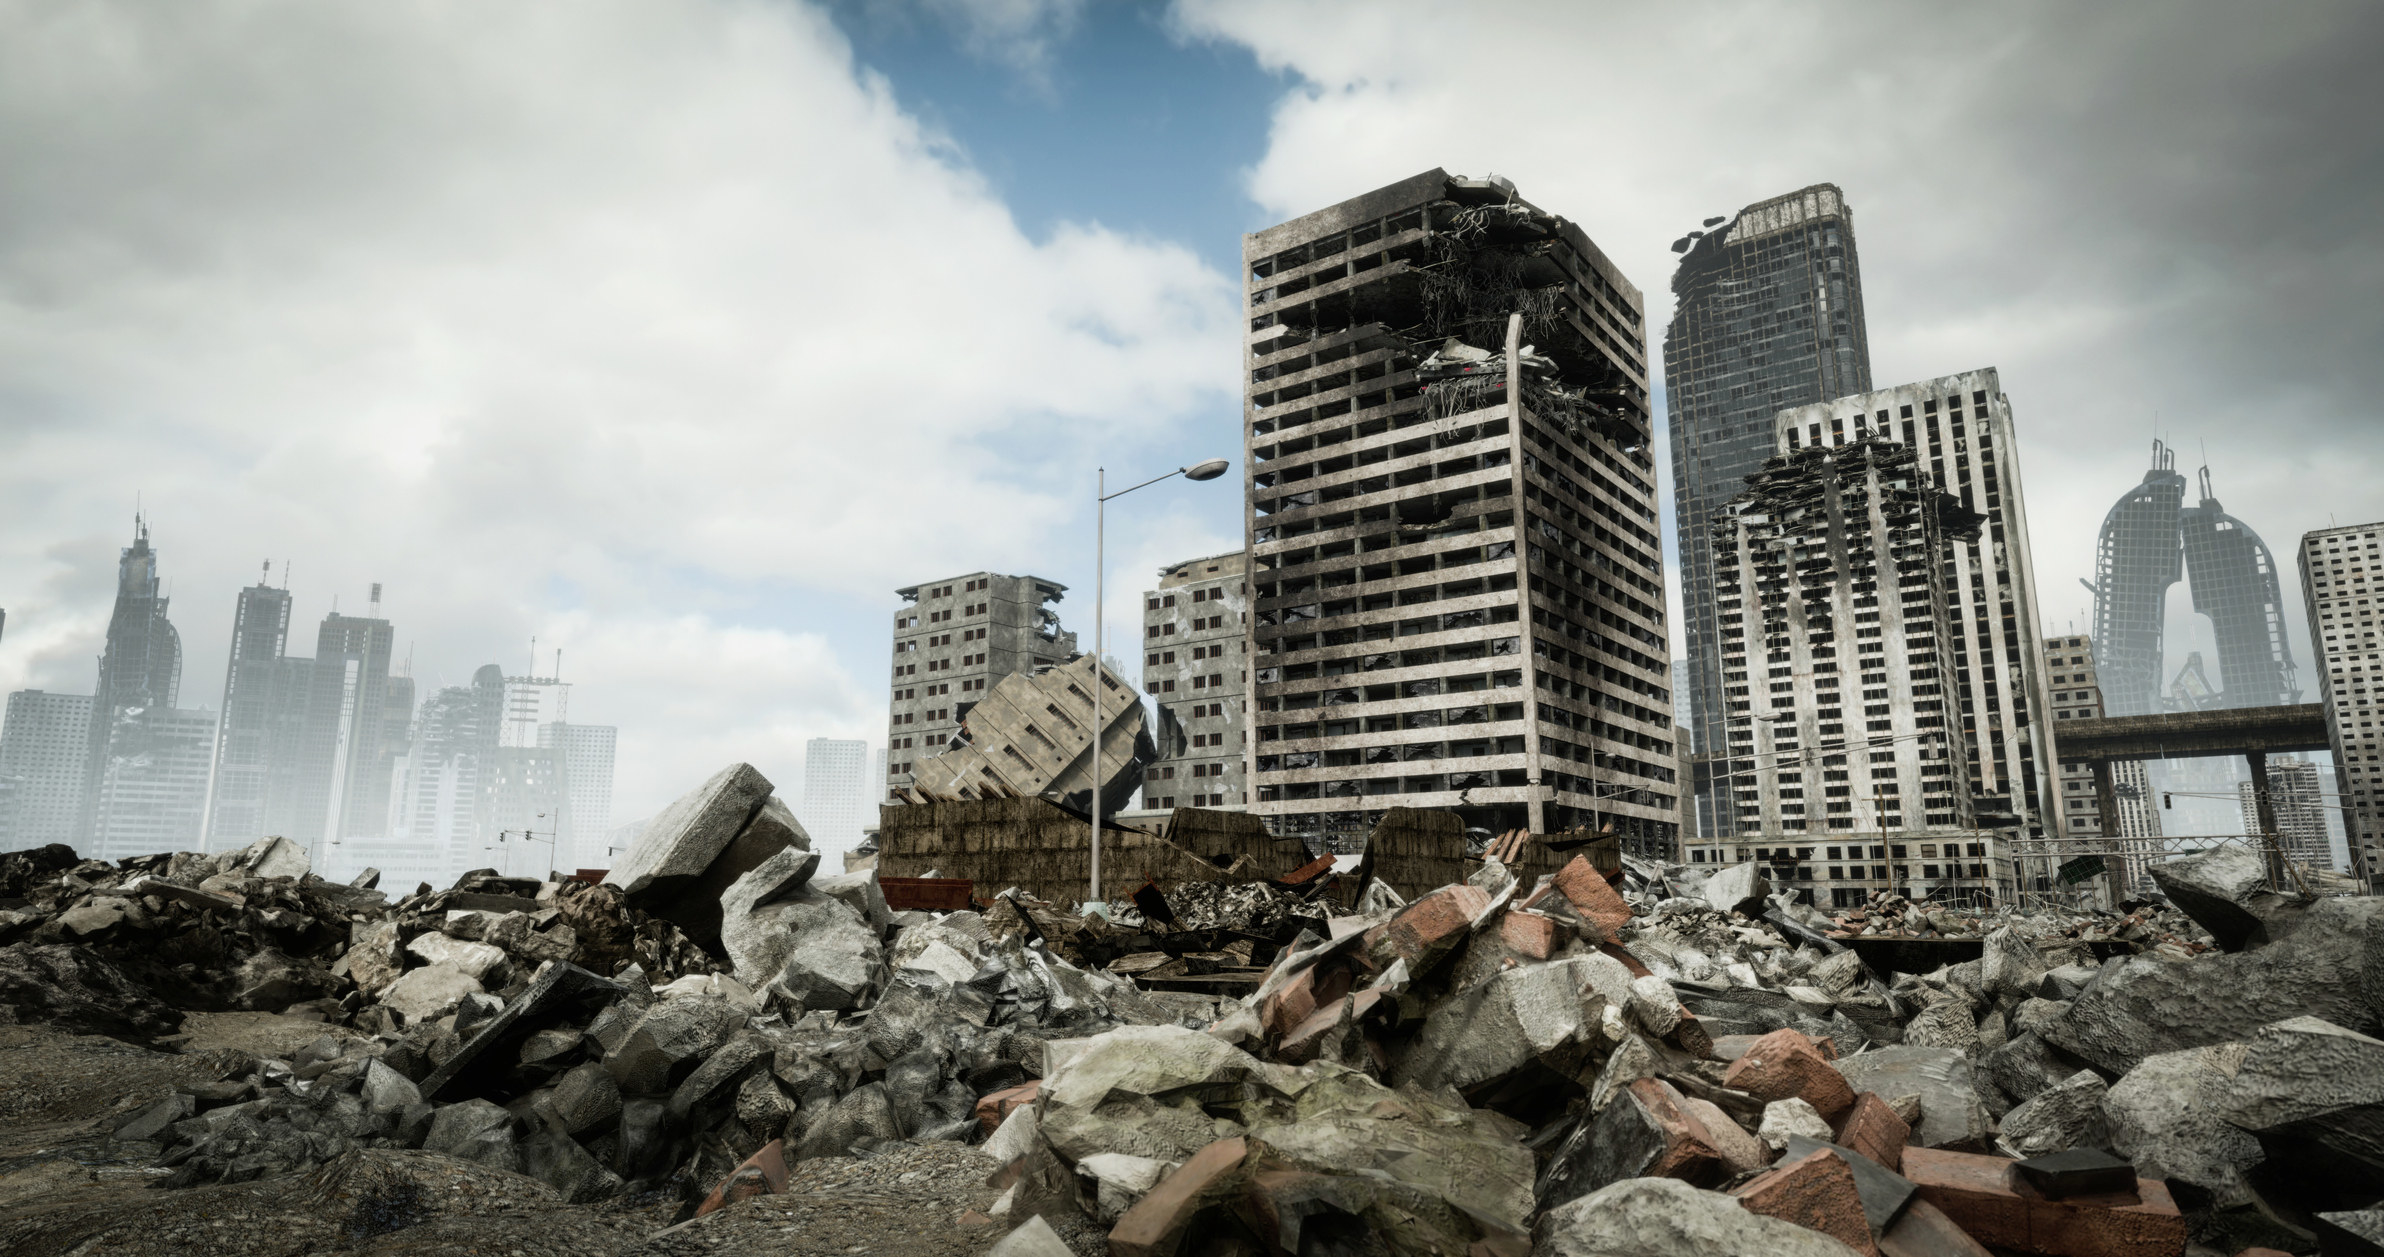 A decimated urban landscape